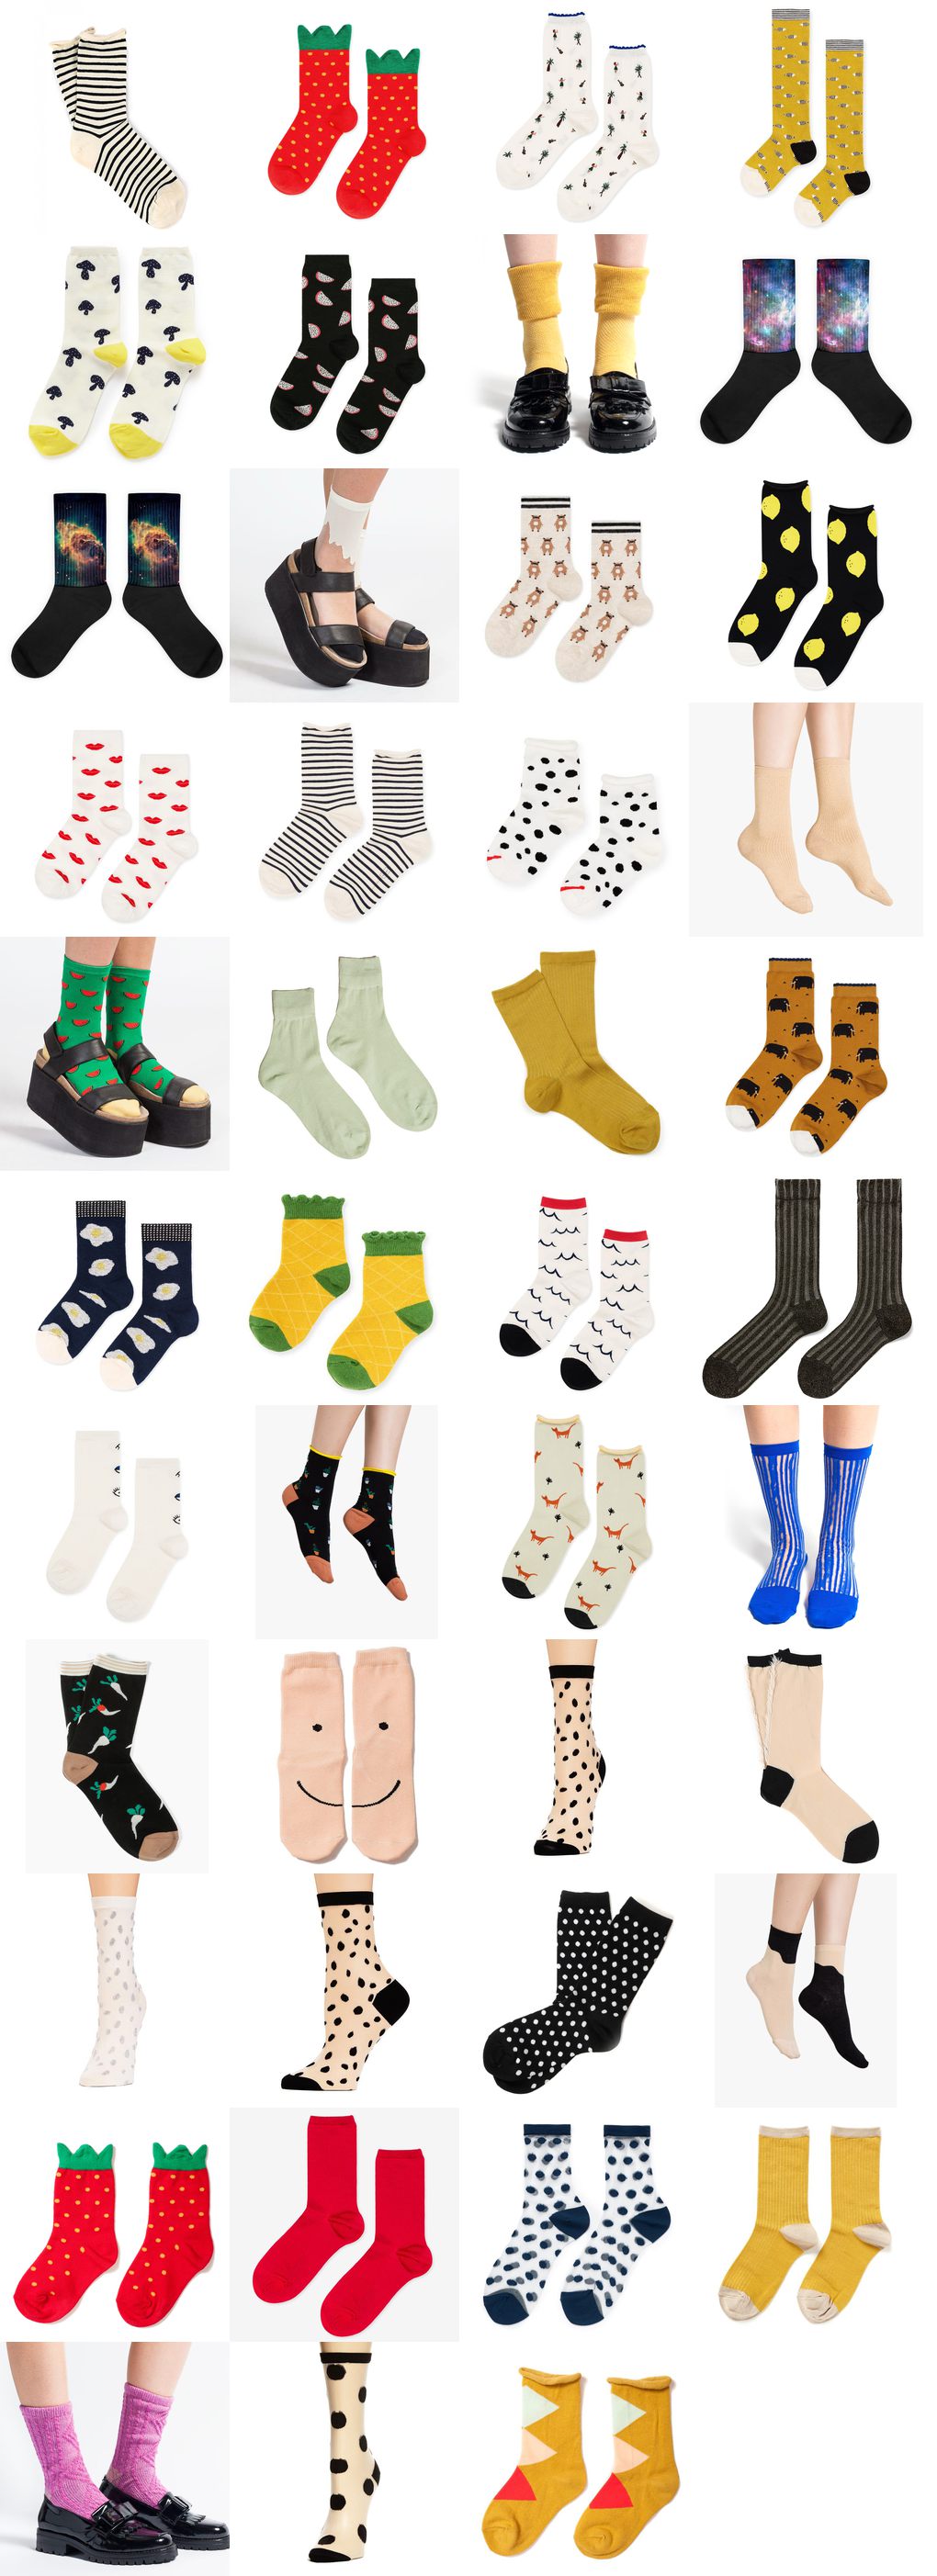 basel socks